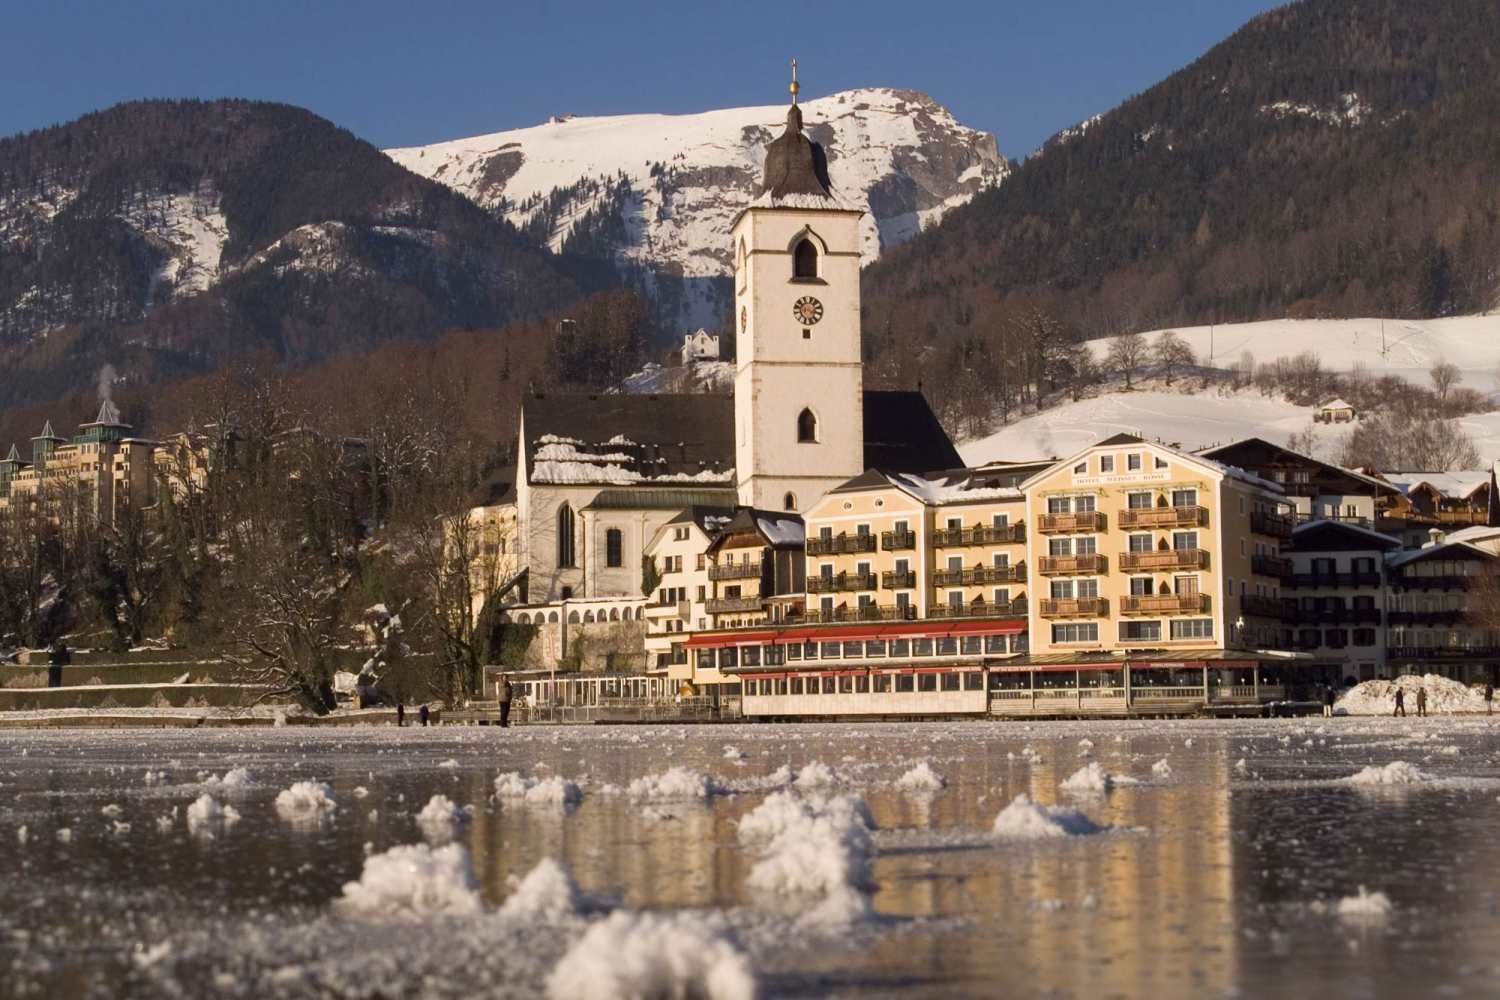 Romantik Hotel Im Weissen Rössl St. Wolfgang im Salzkammergut, Upper Austria